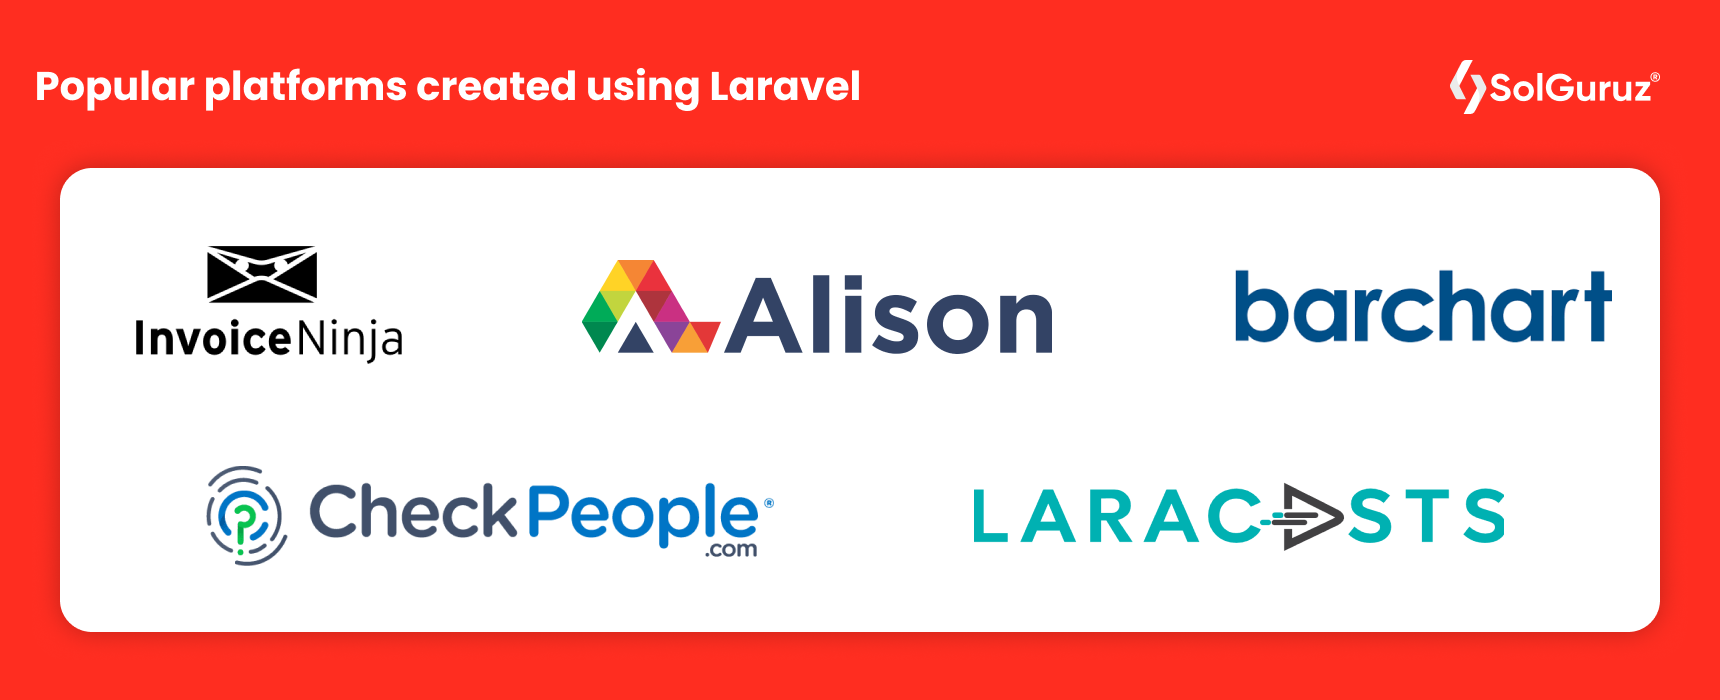 Popular platforms created using Laravel